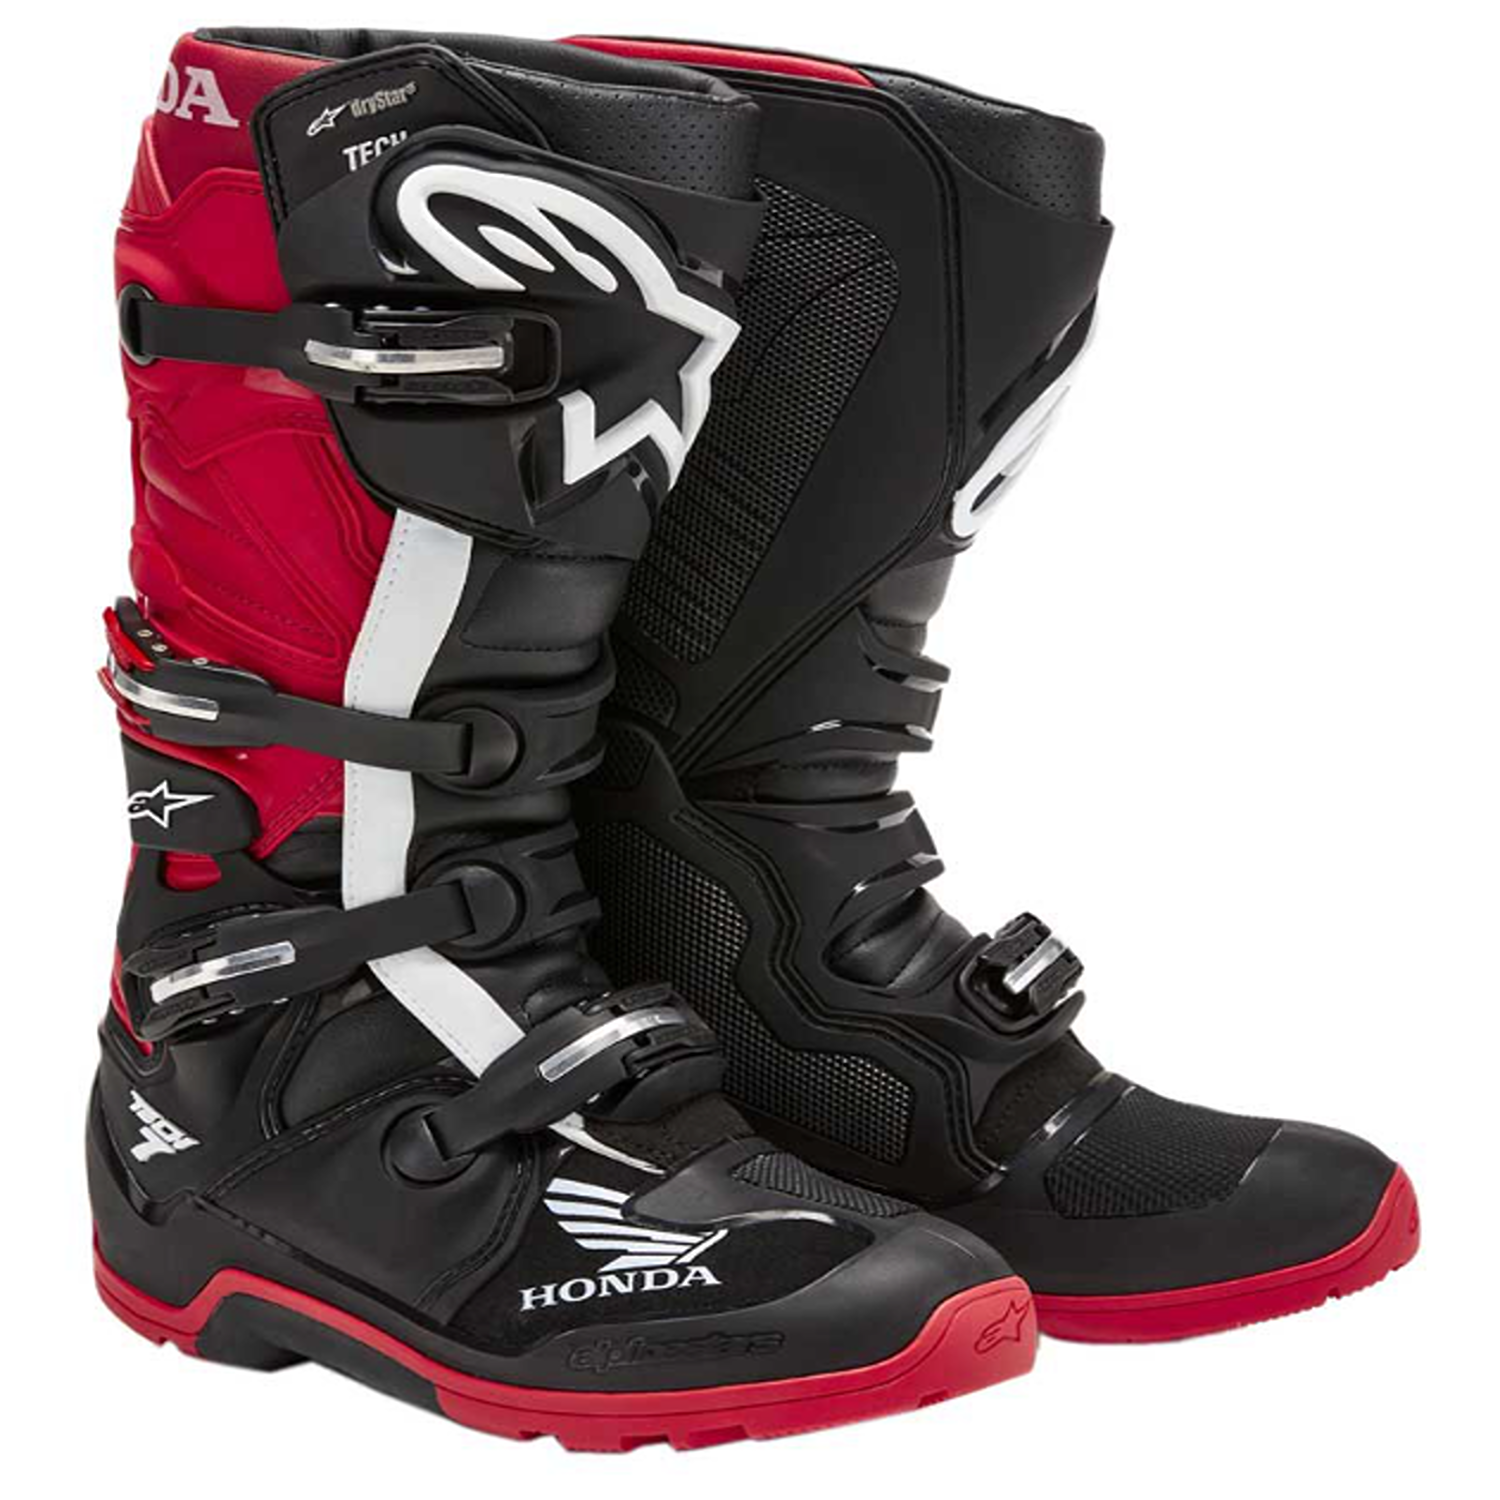 Image of Alpinestars Honda Tech 7 Enduro Drystar Boots Black Bright Red Size US 8 ID 8059347155500